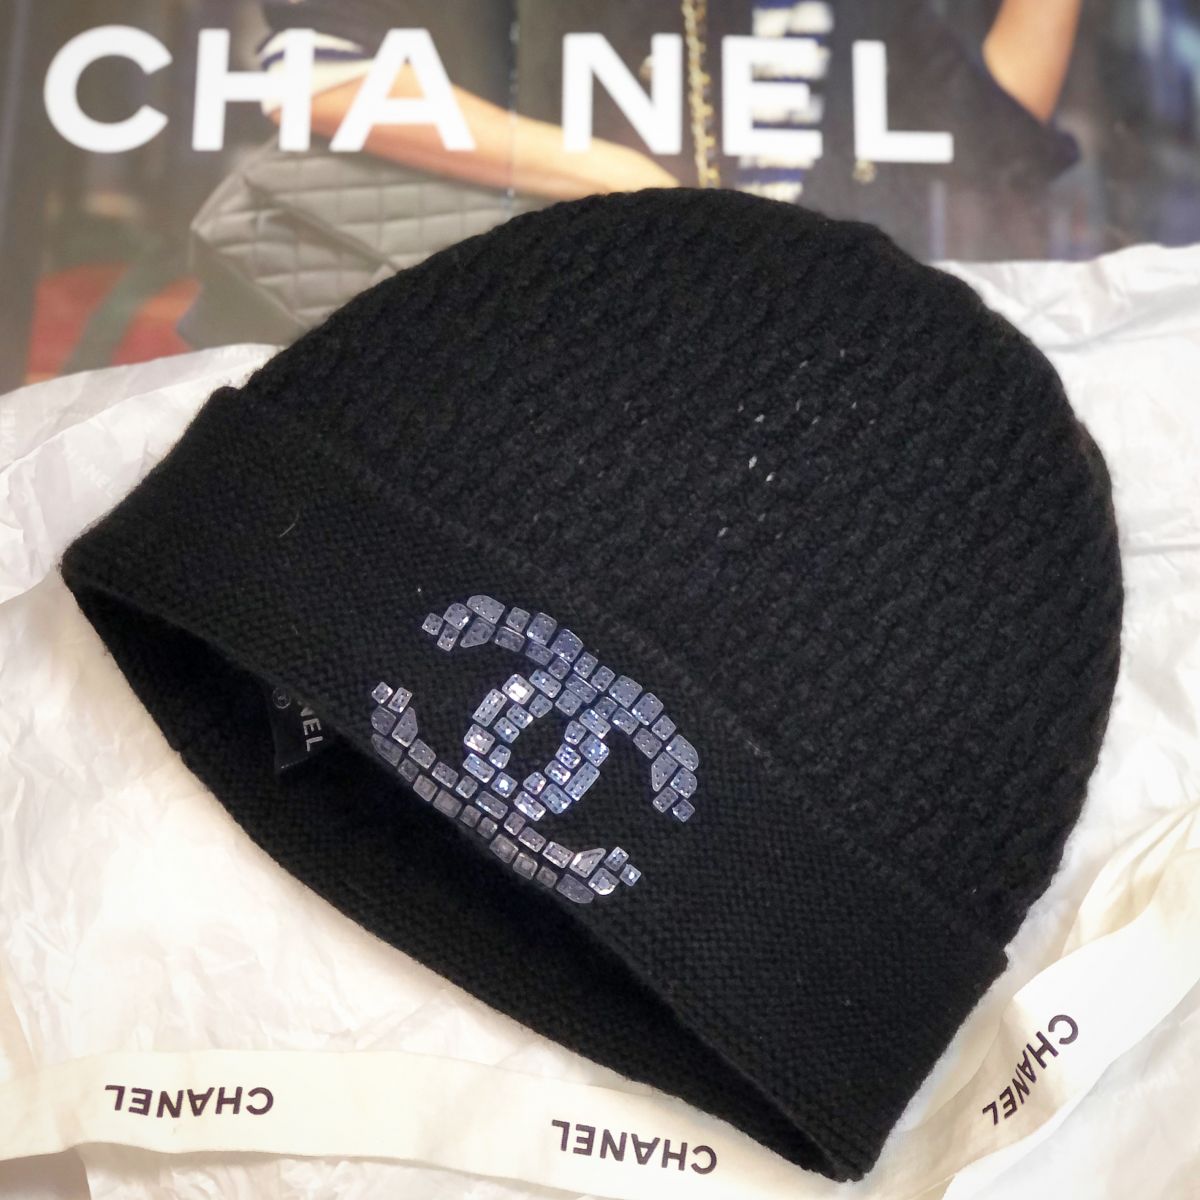 Шапка / кашемир / декоративная отделка / Chanel  цена 15 385 руб 